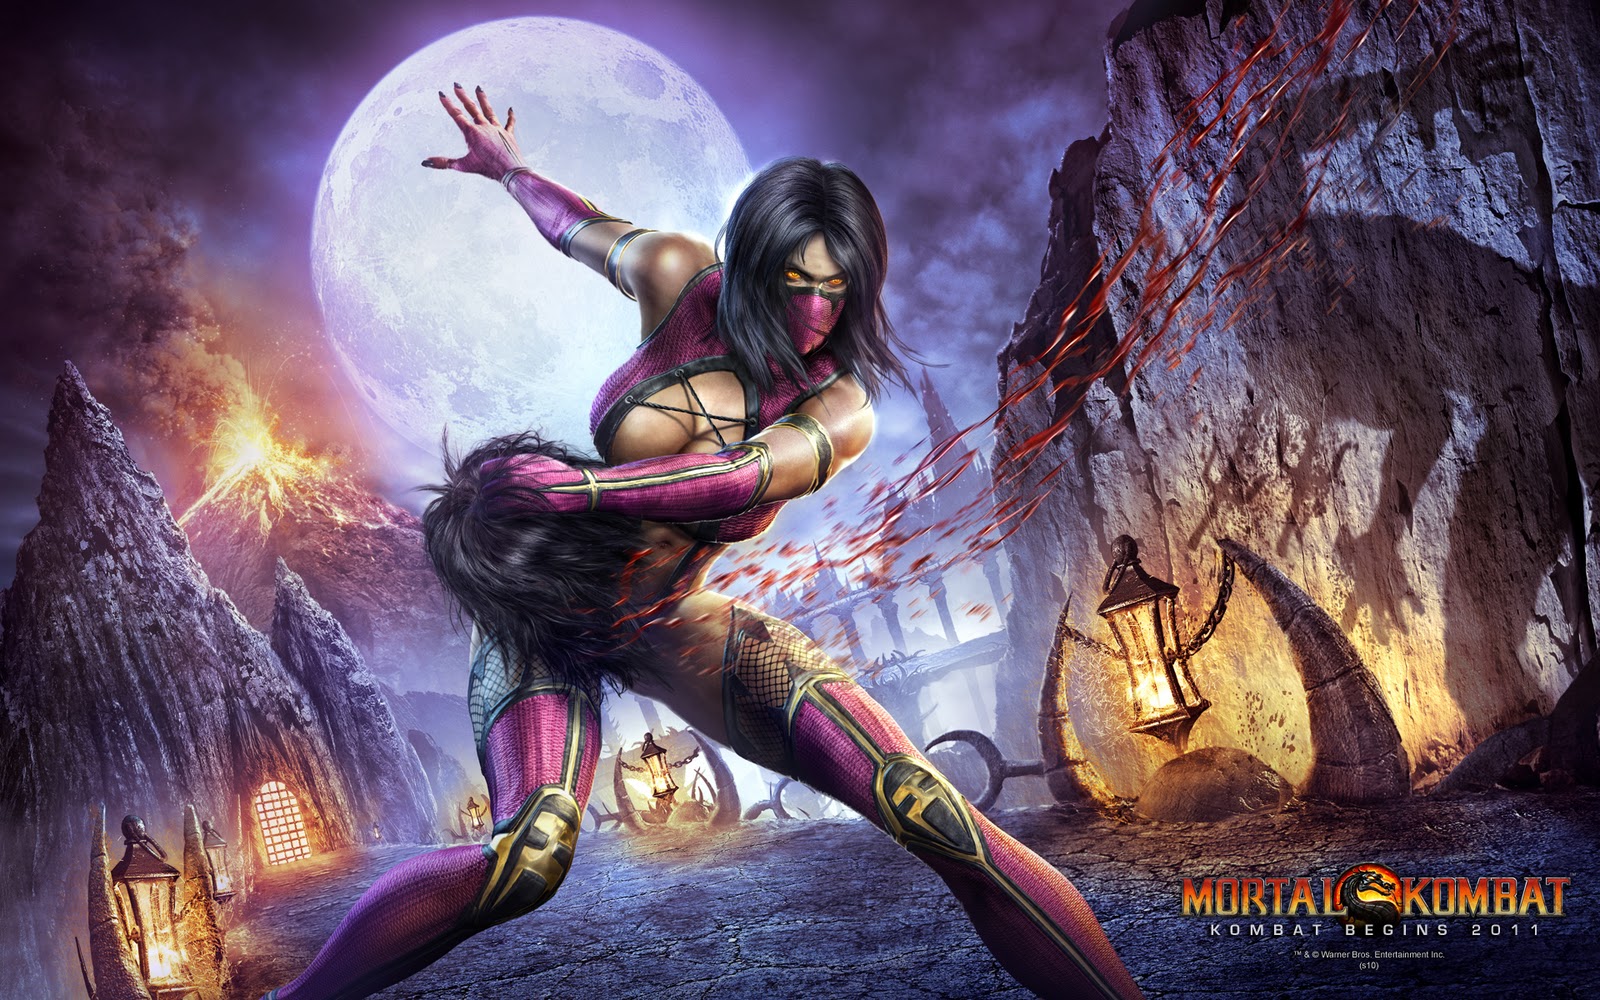 Mortal Kombat 9 Komplete Edition - Noob Saibot All Fatalities